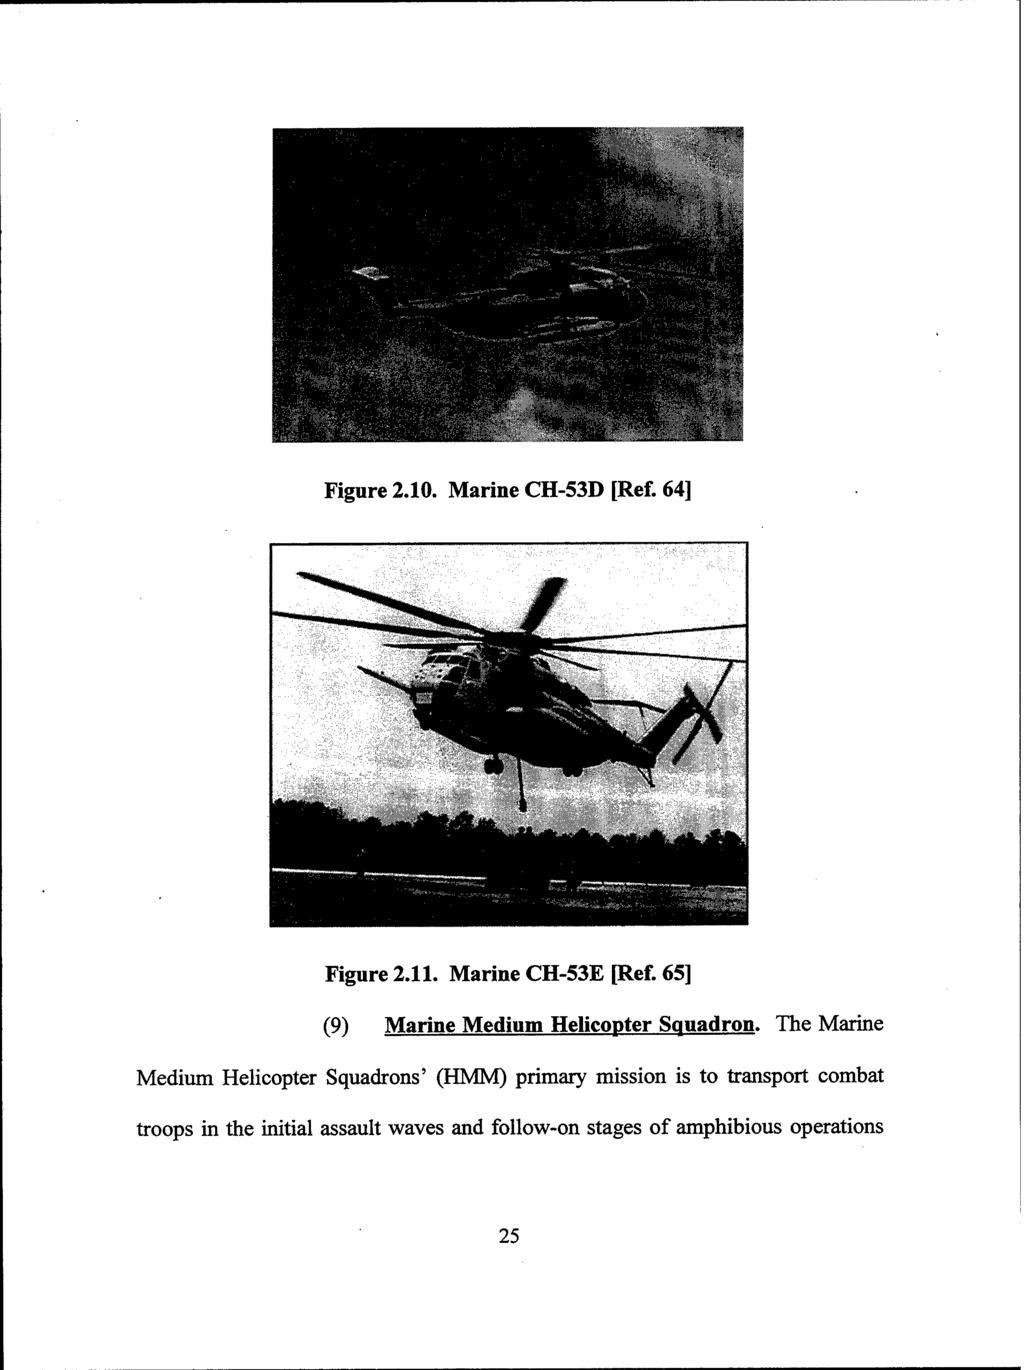 Figure 2.10. Marine CH-53D [Ref. 64] Figure 2.11. Marine CH-53E [Ref. 65] (9) Marine Medium Helicopter Squadron.